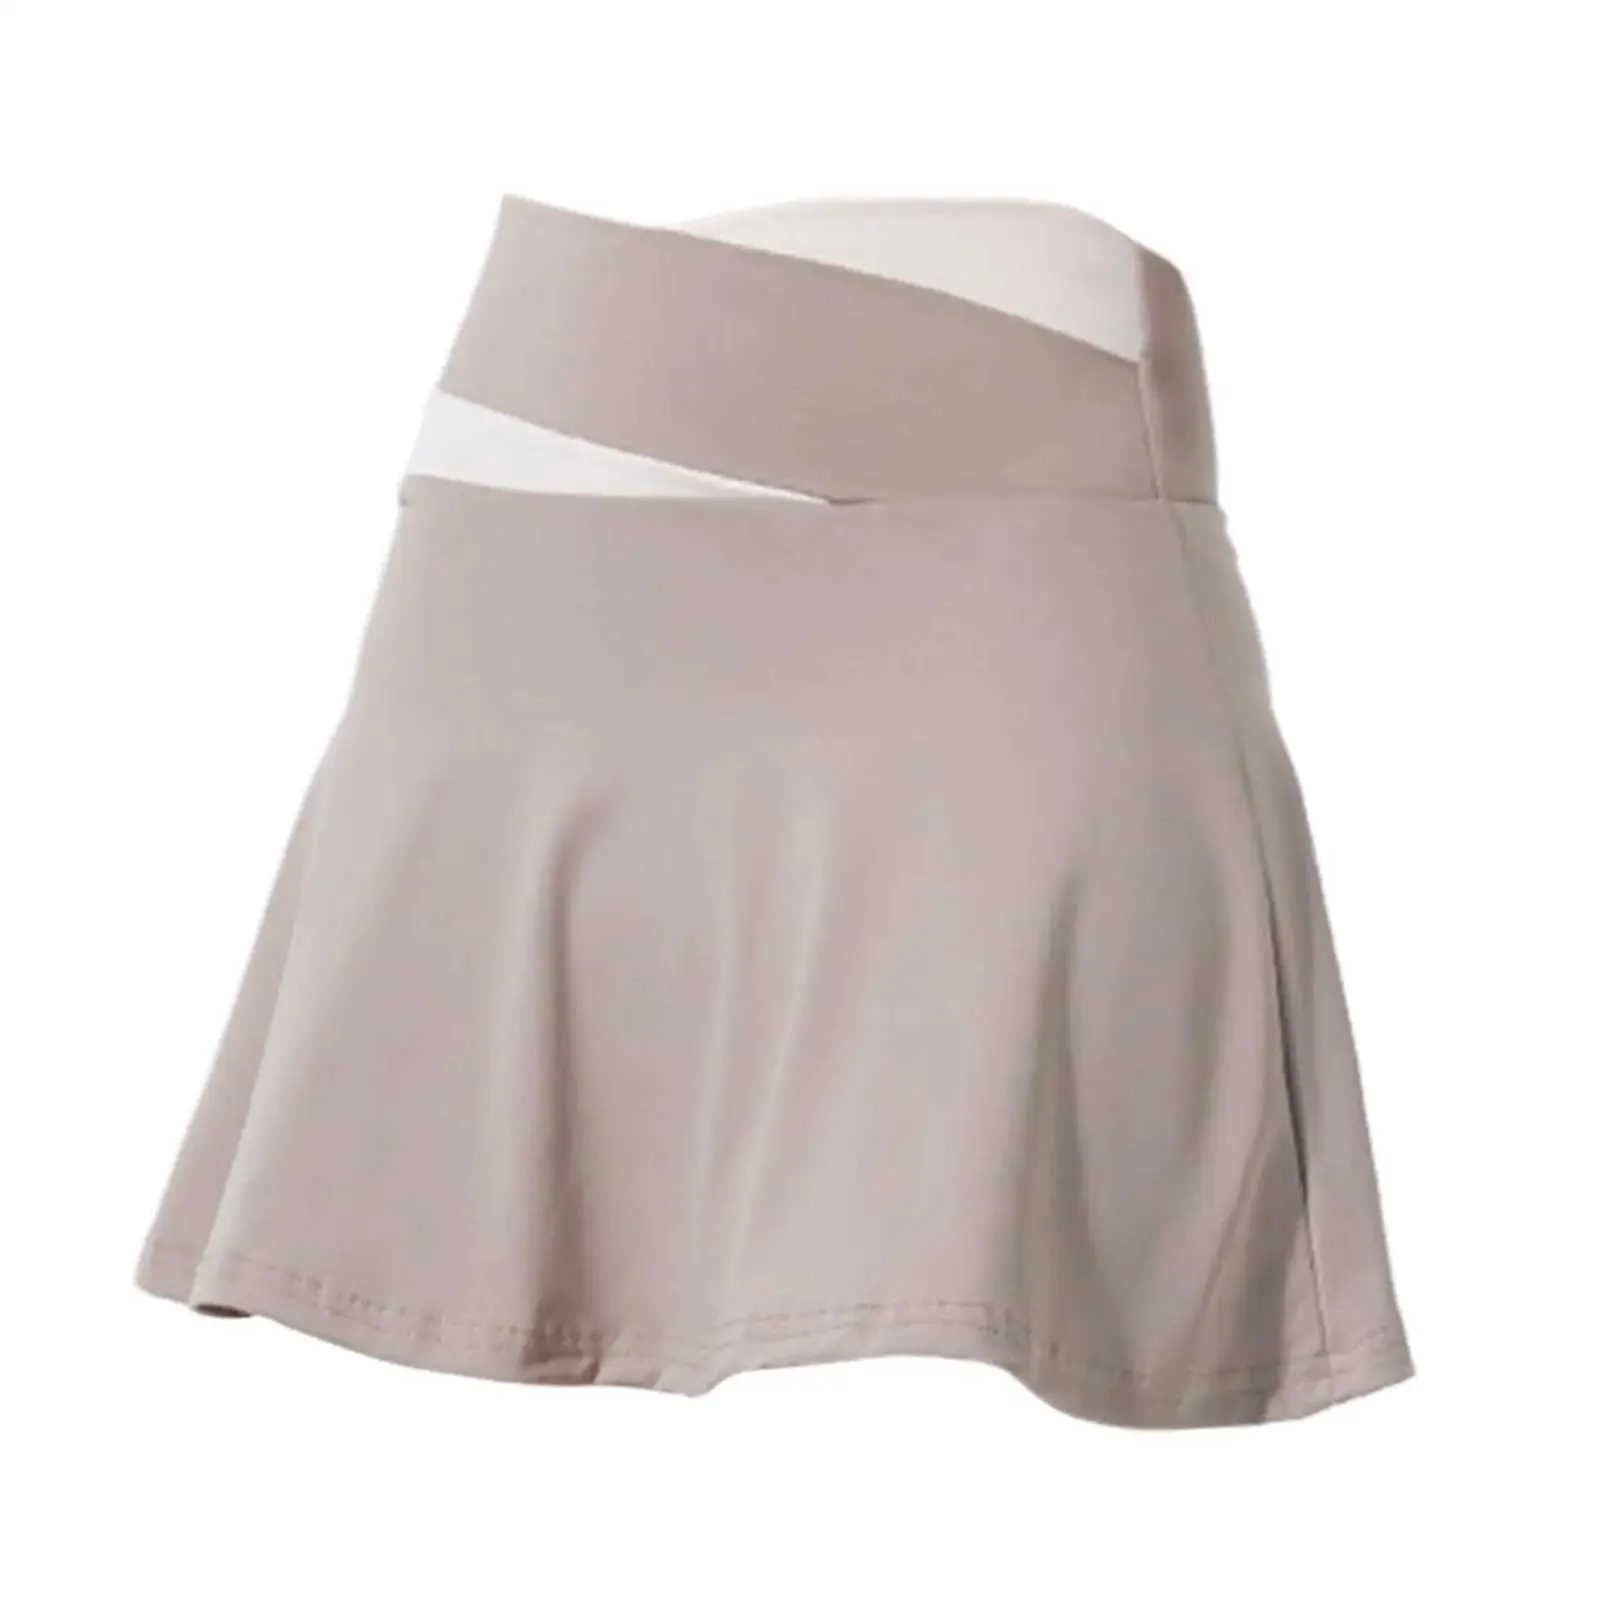 Tennis Skirt Short Skirts Streetwear Soft High Waist Quick Drying Casual Badminton Skirts for Running Jogging Gym Sports Workout